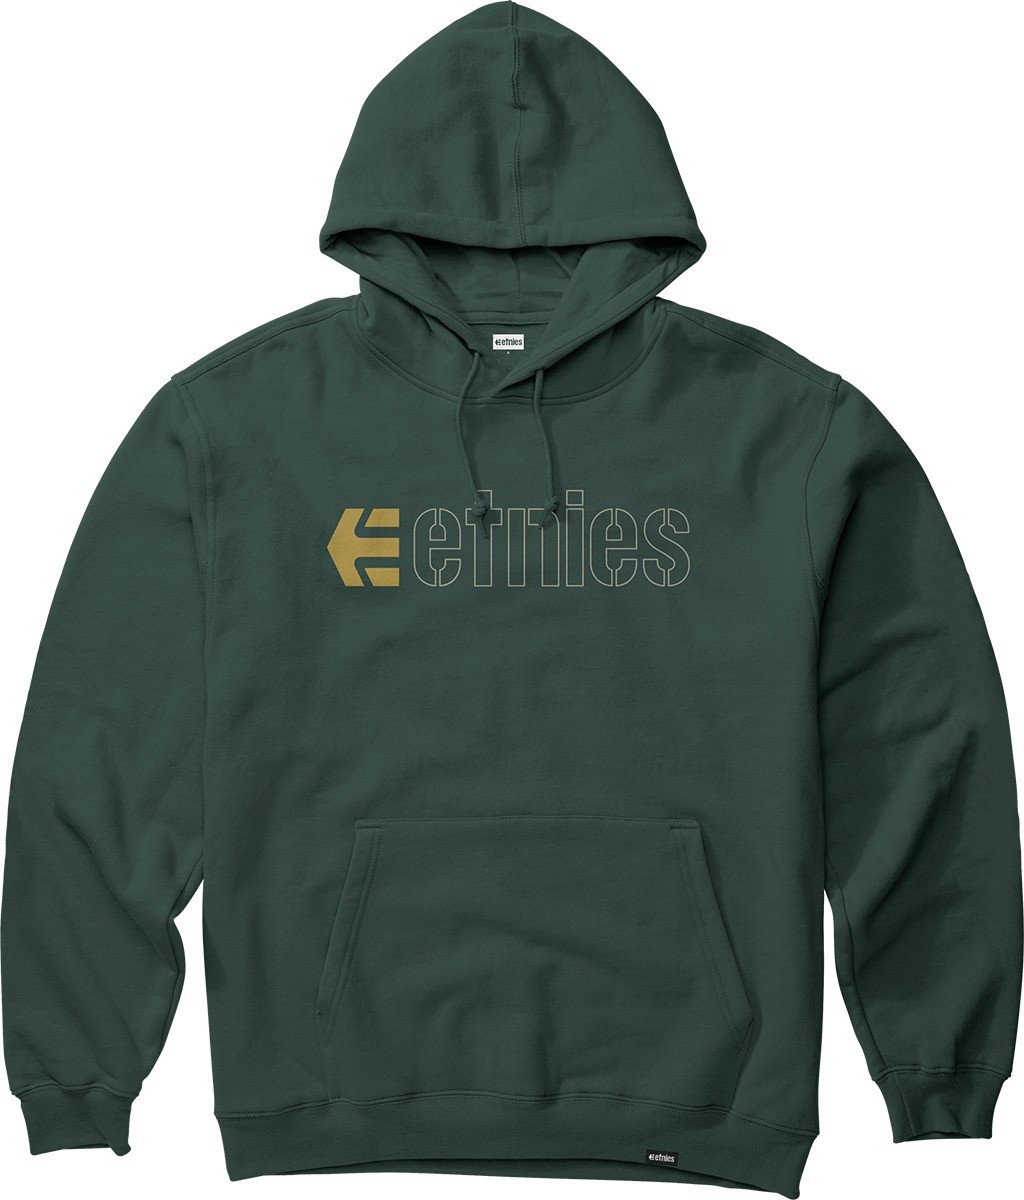 Etnies Ecorp Grn Gld Sweatshirt